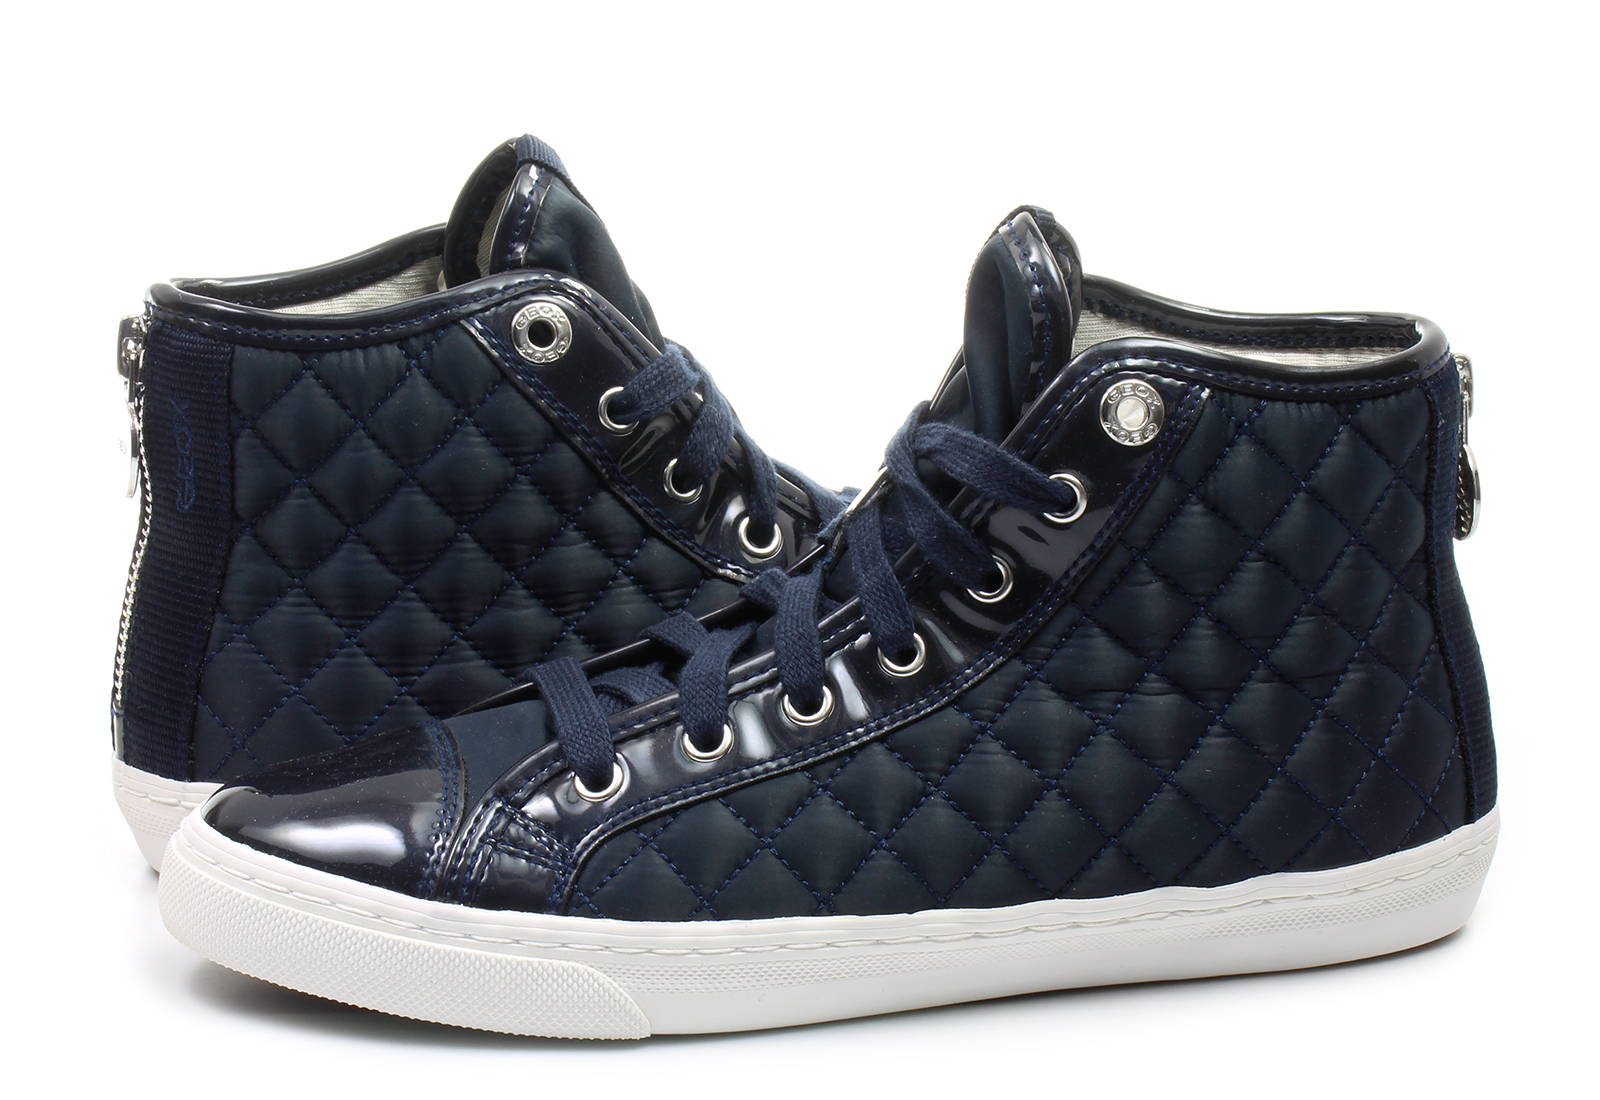 Geox Niske Cipele Plave Cipele New Club - Shoes - Online trgovina obuće